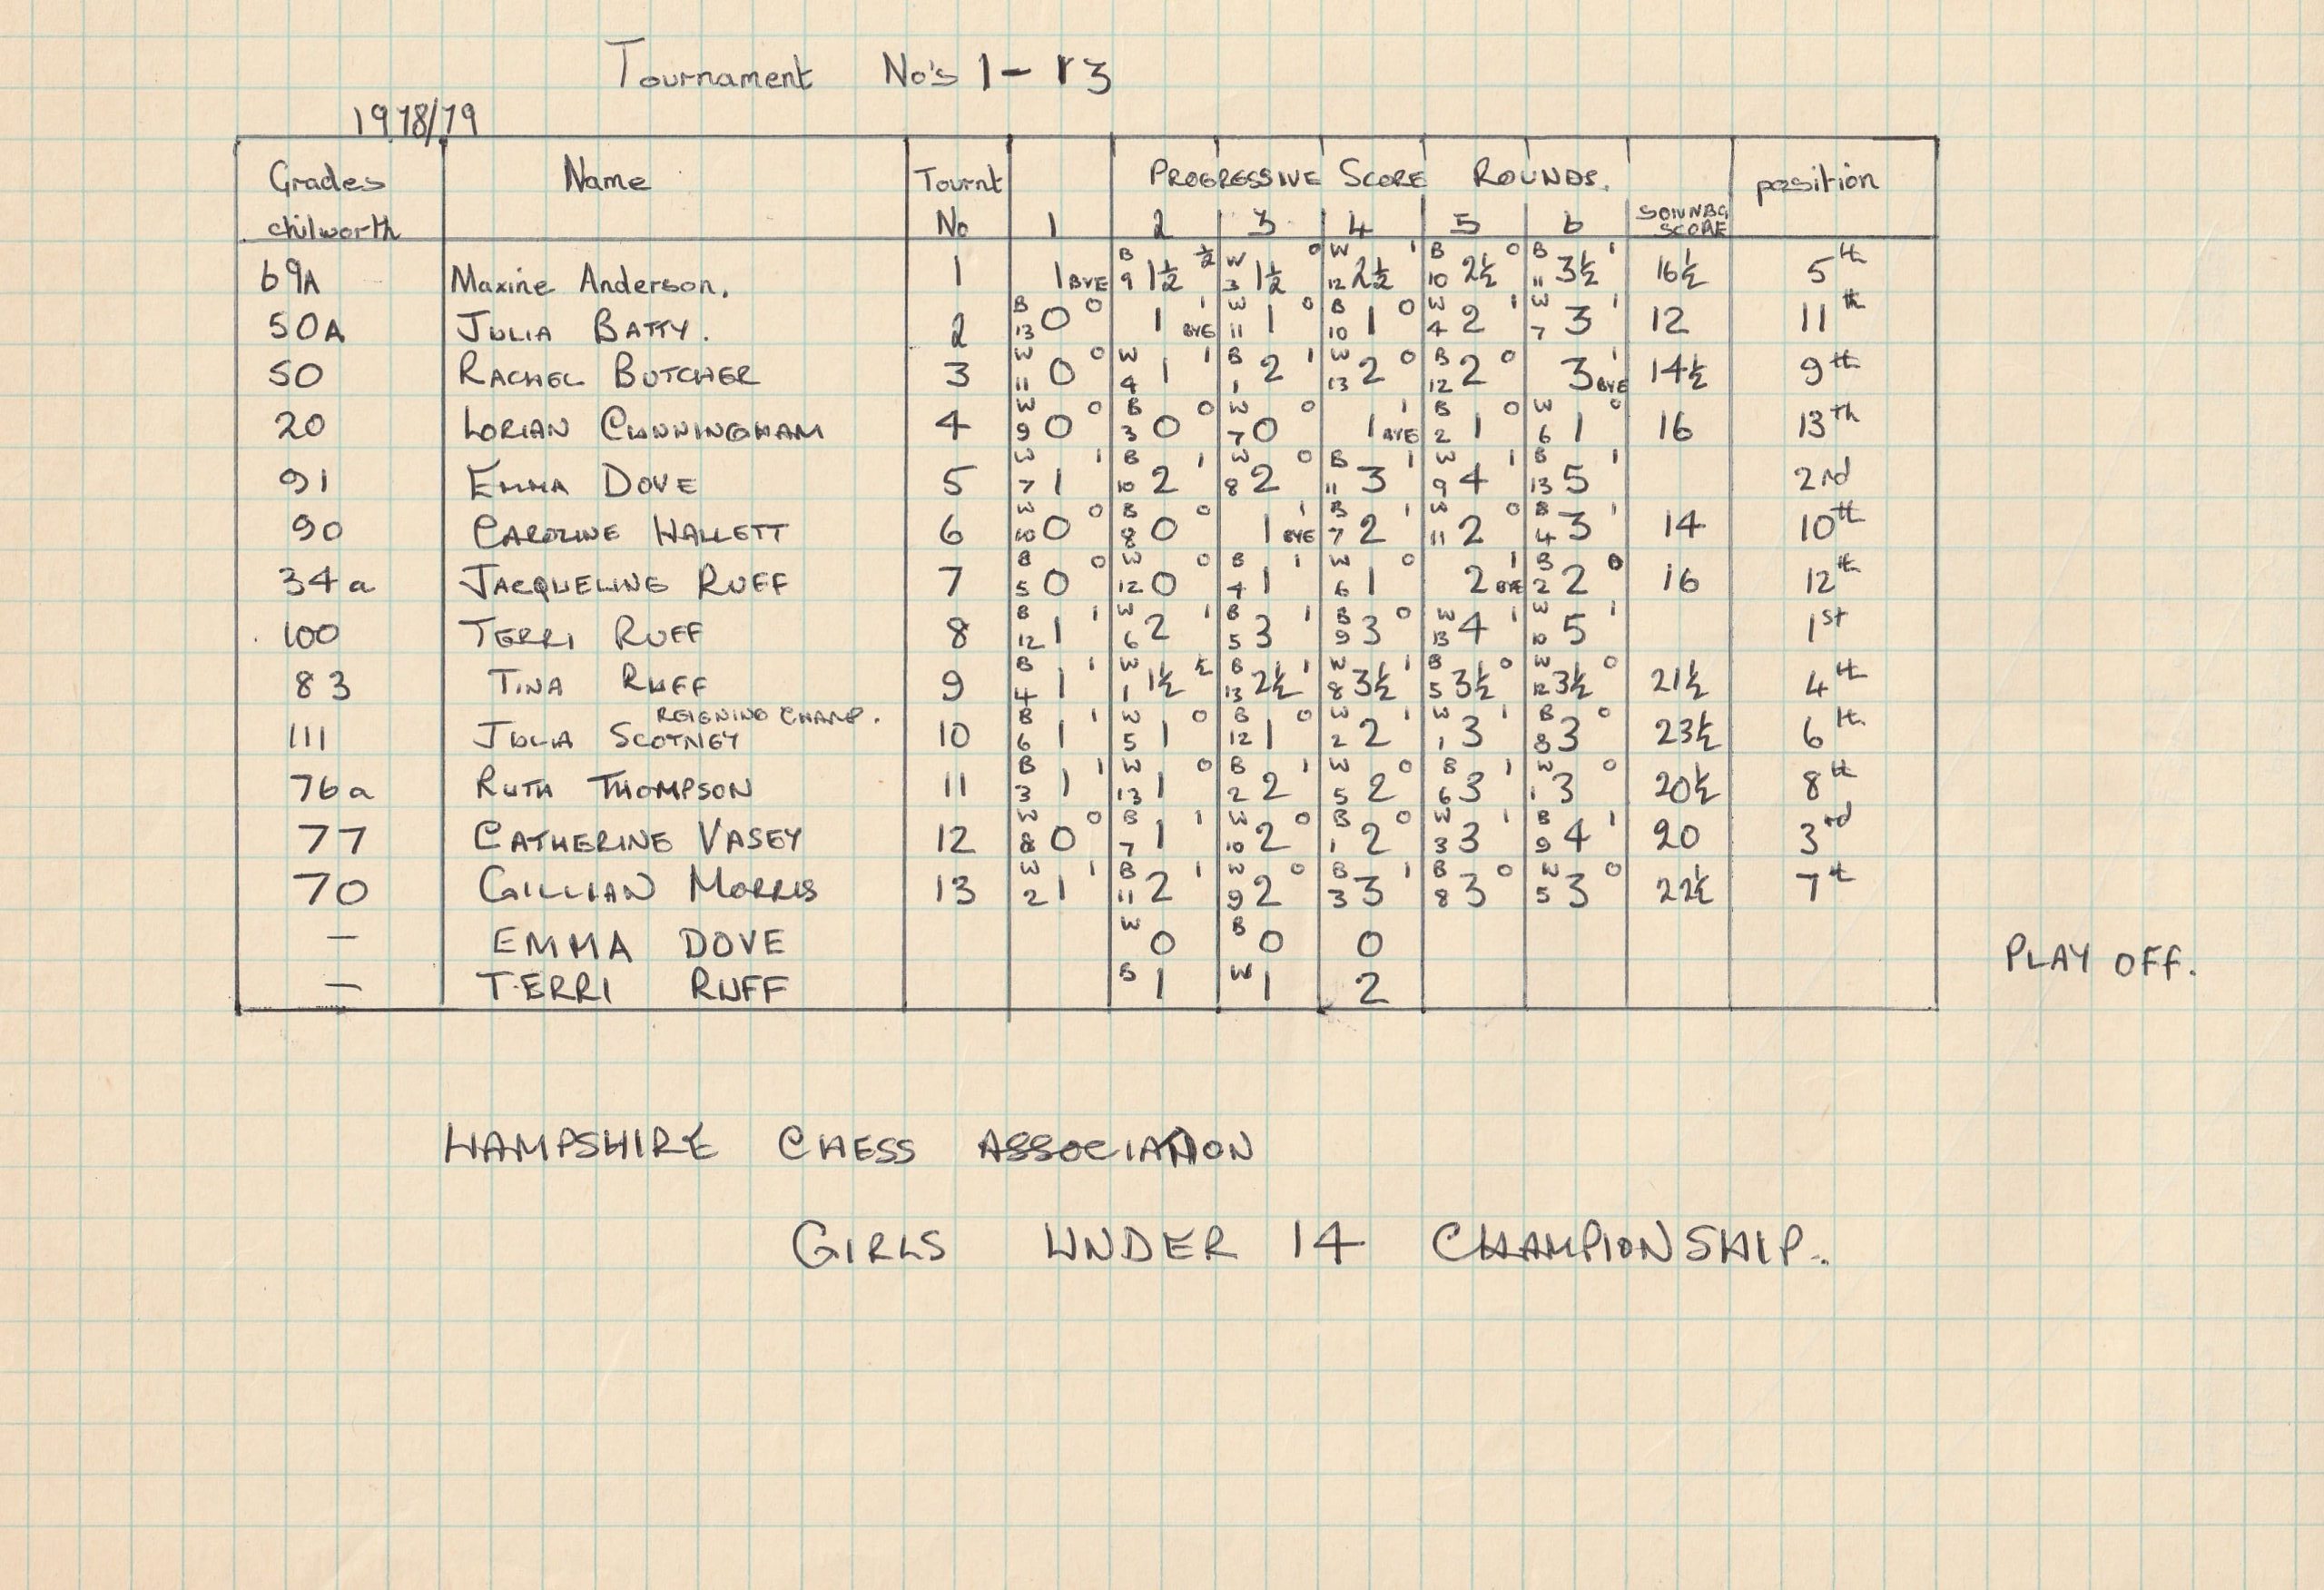 HCA Under 14 Girls Championship 1978 1979